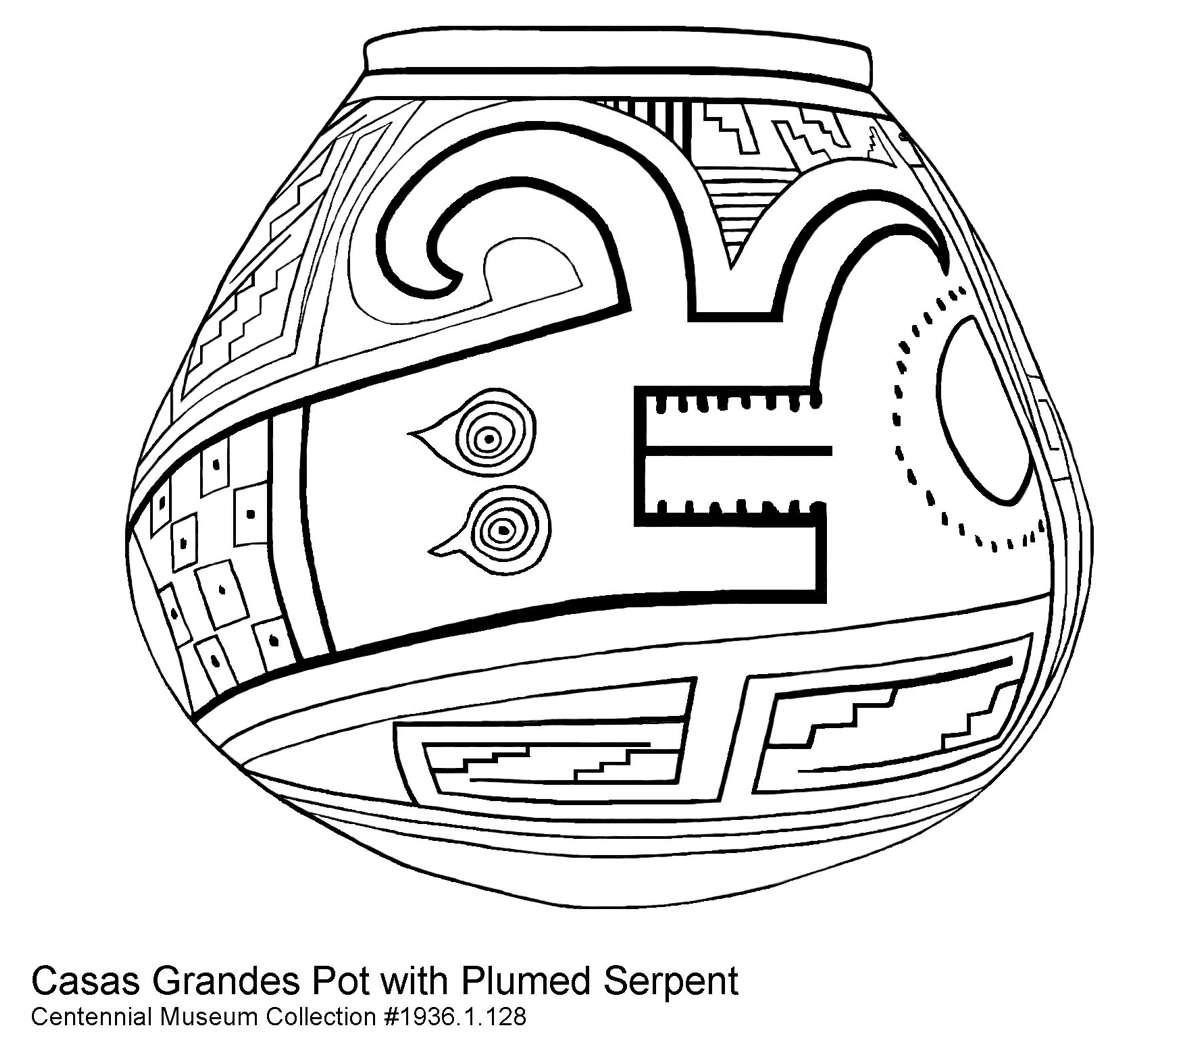 Coloring page: Casas Grandes plumed serpent vessel